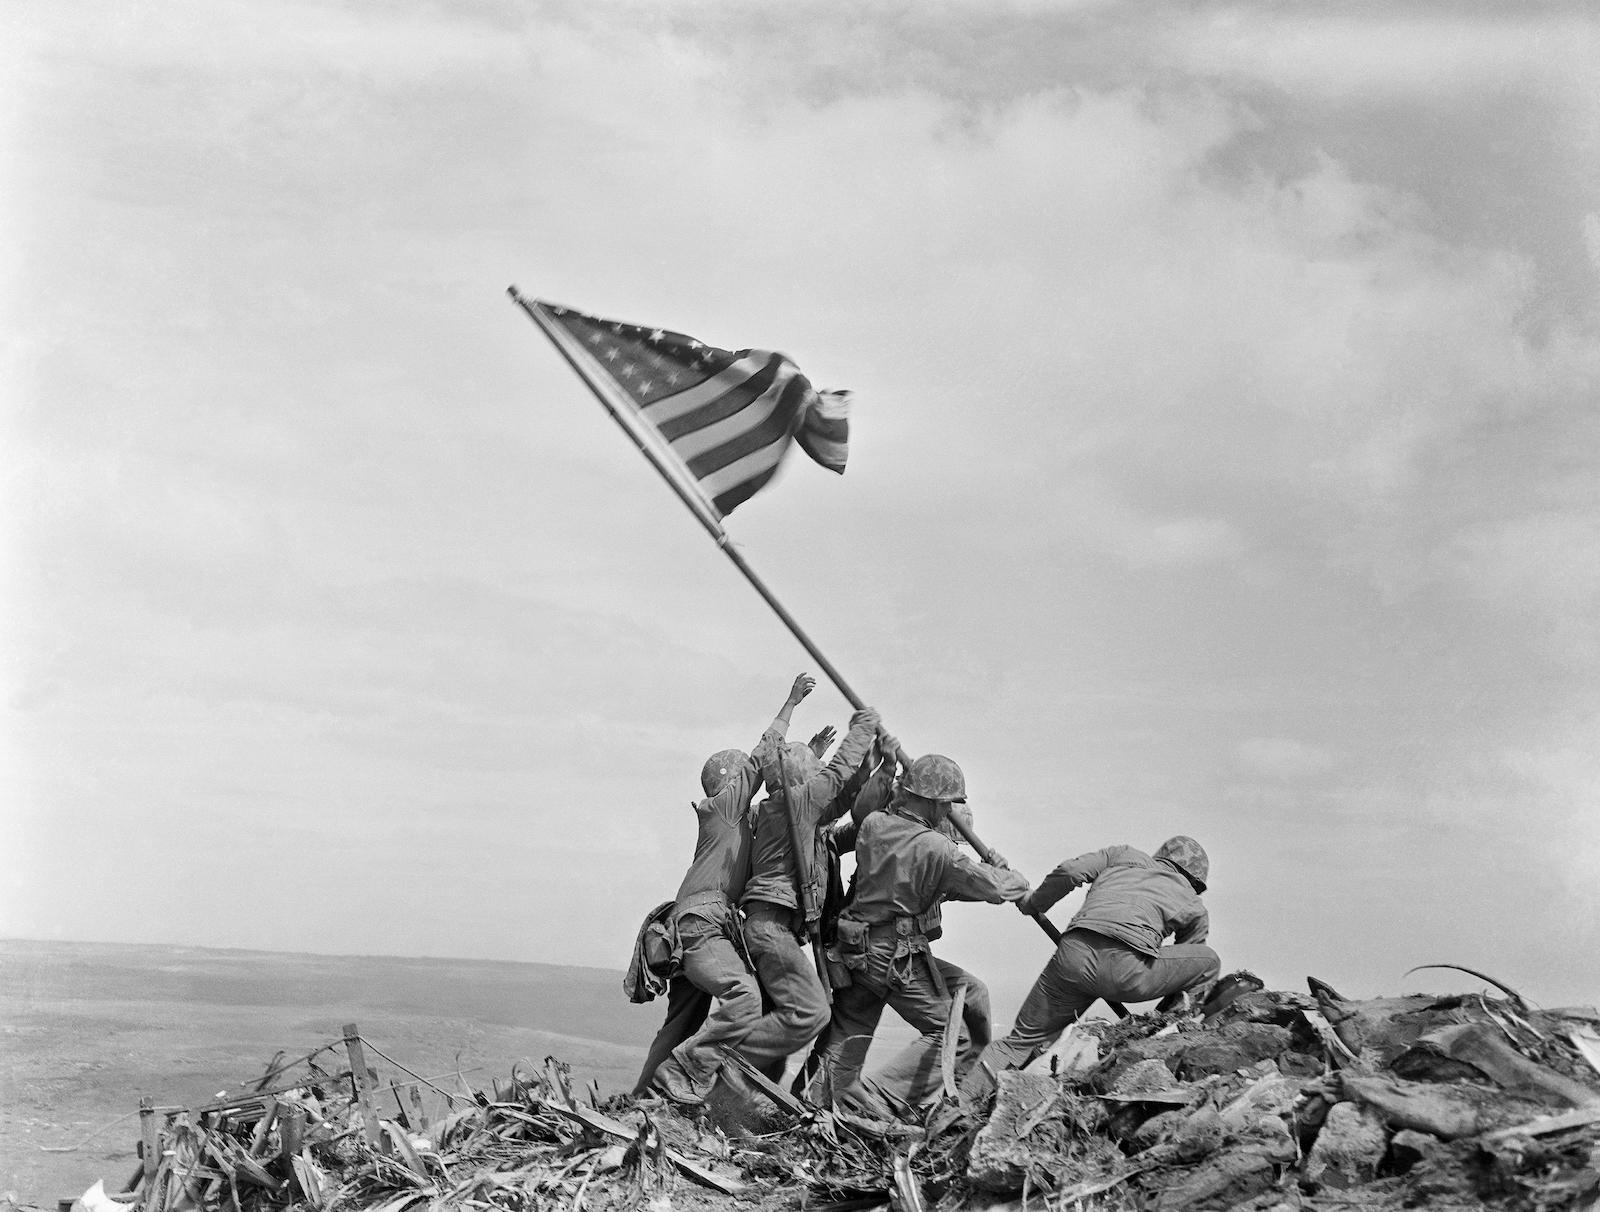 Joe Rosenthal, Raising the Flag on Iwo Jima, February 23, 1945.